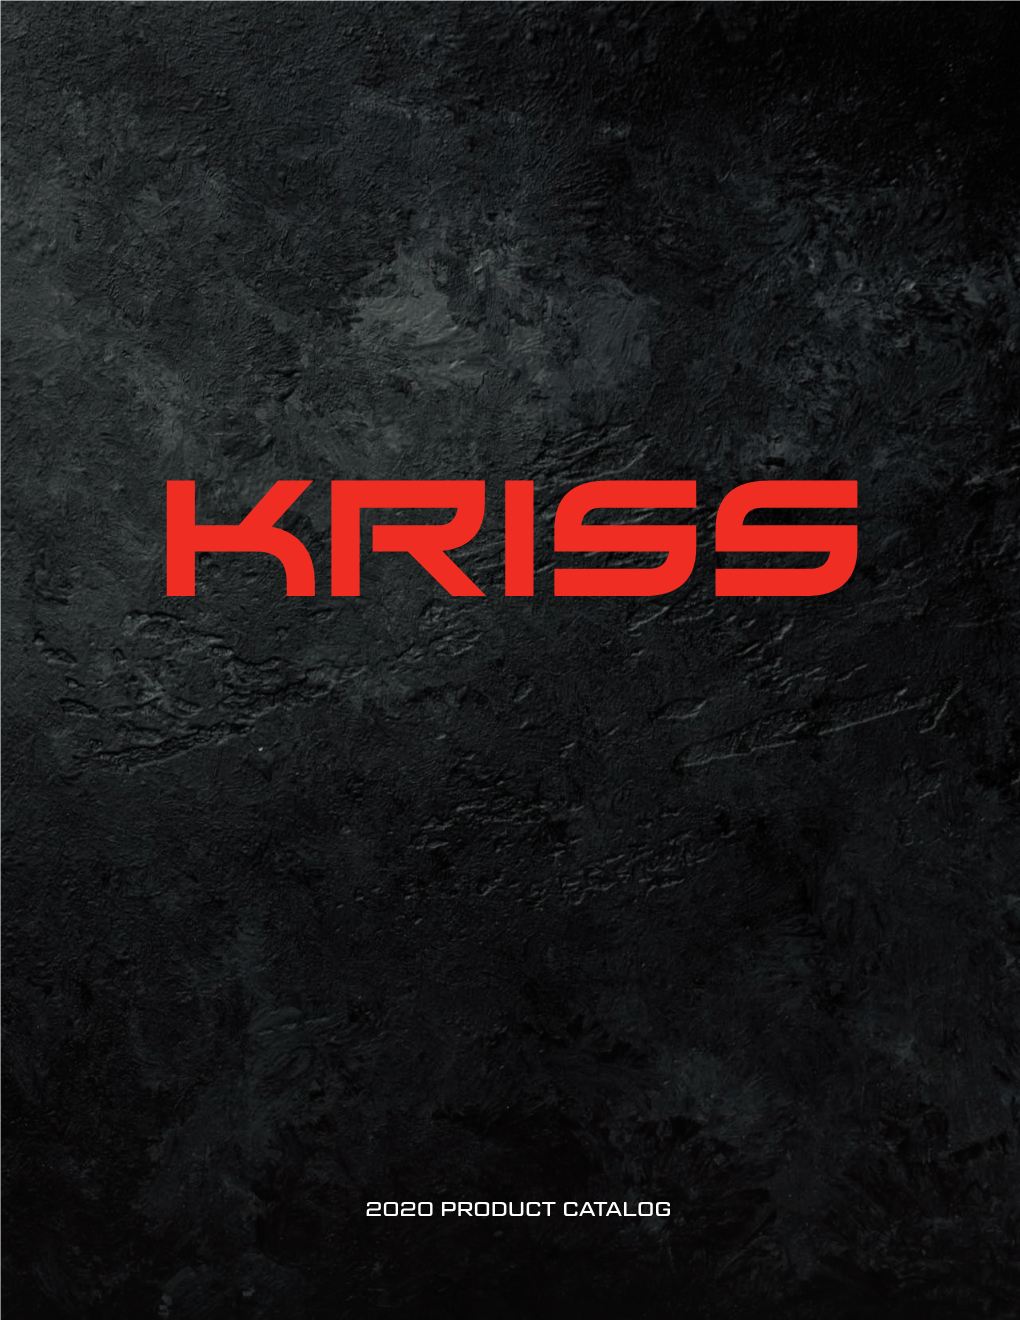 Download KRISS Catalog 2020